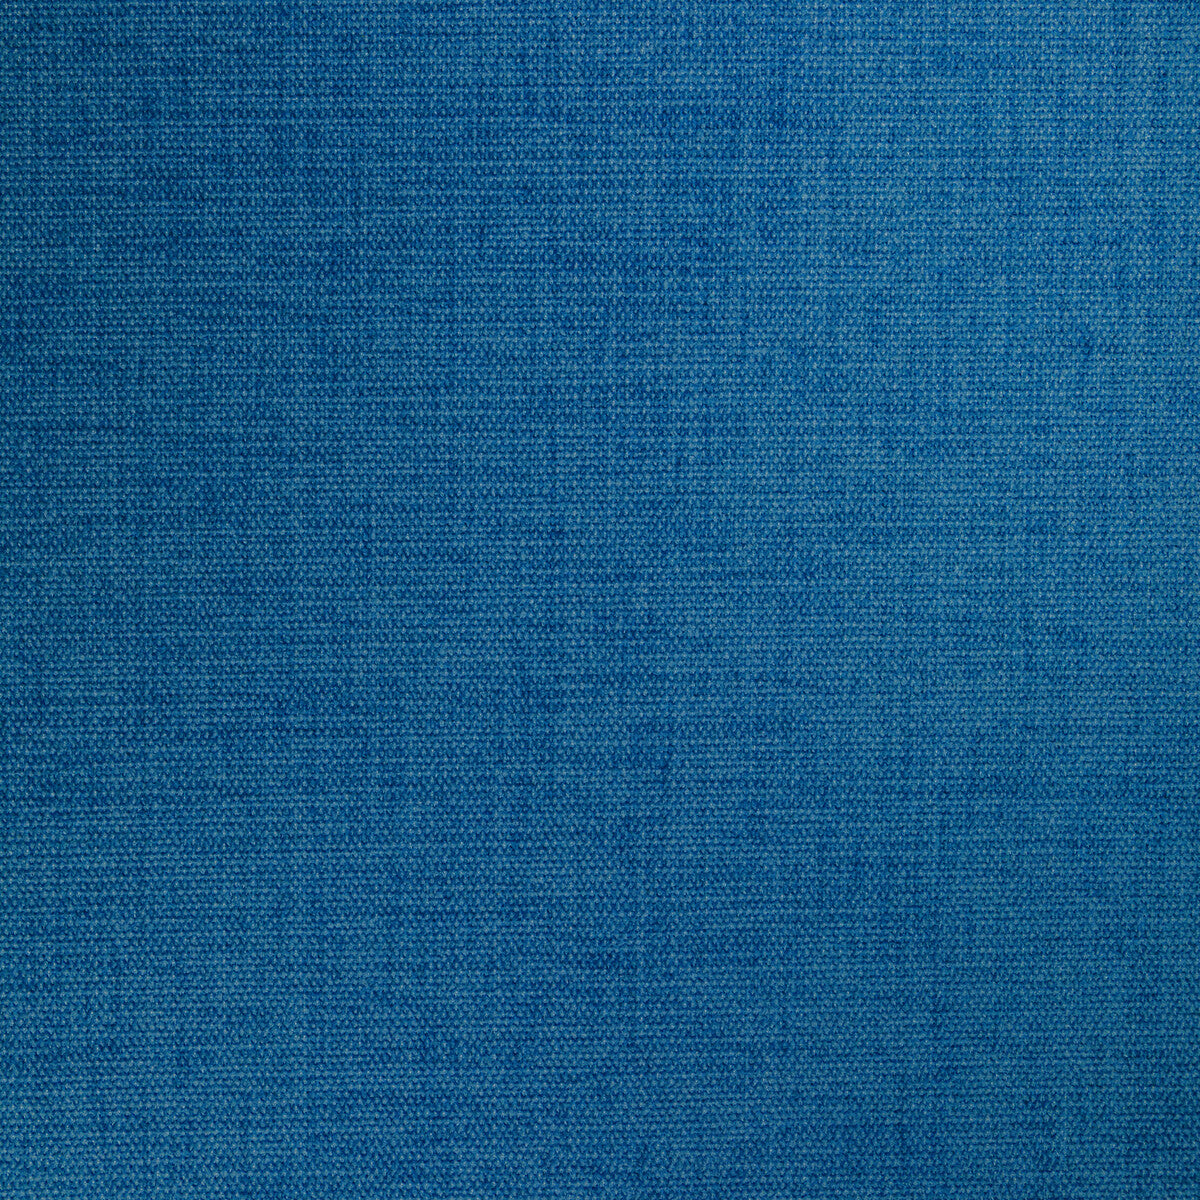 Kravet Smart fabric in 34959-1535 color - pattern 34959.1535.0 - by Kravet Smart in the Performance Kravetarmor collection